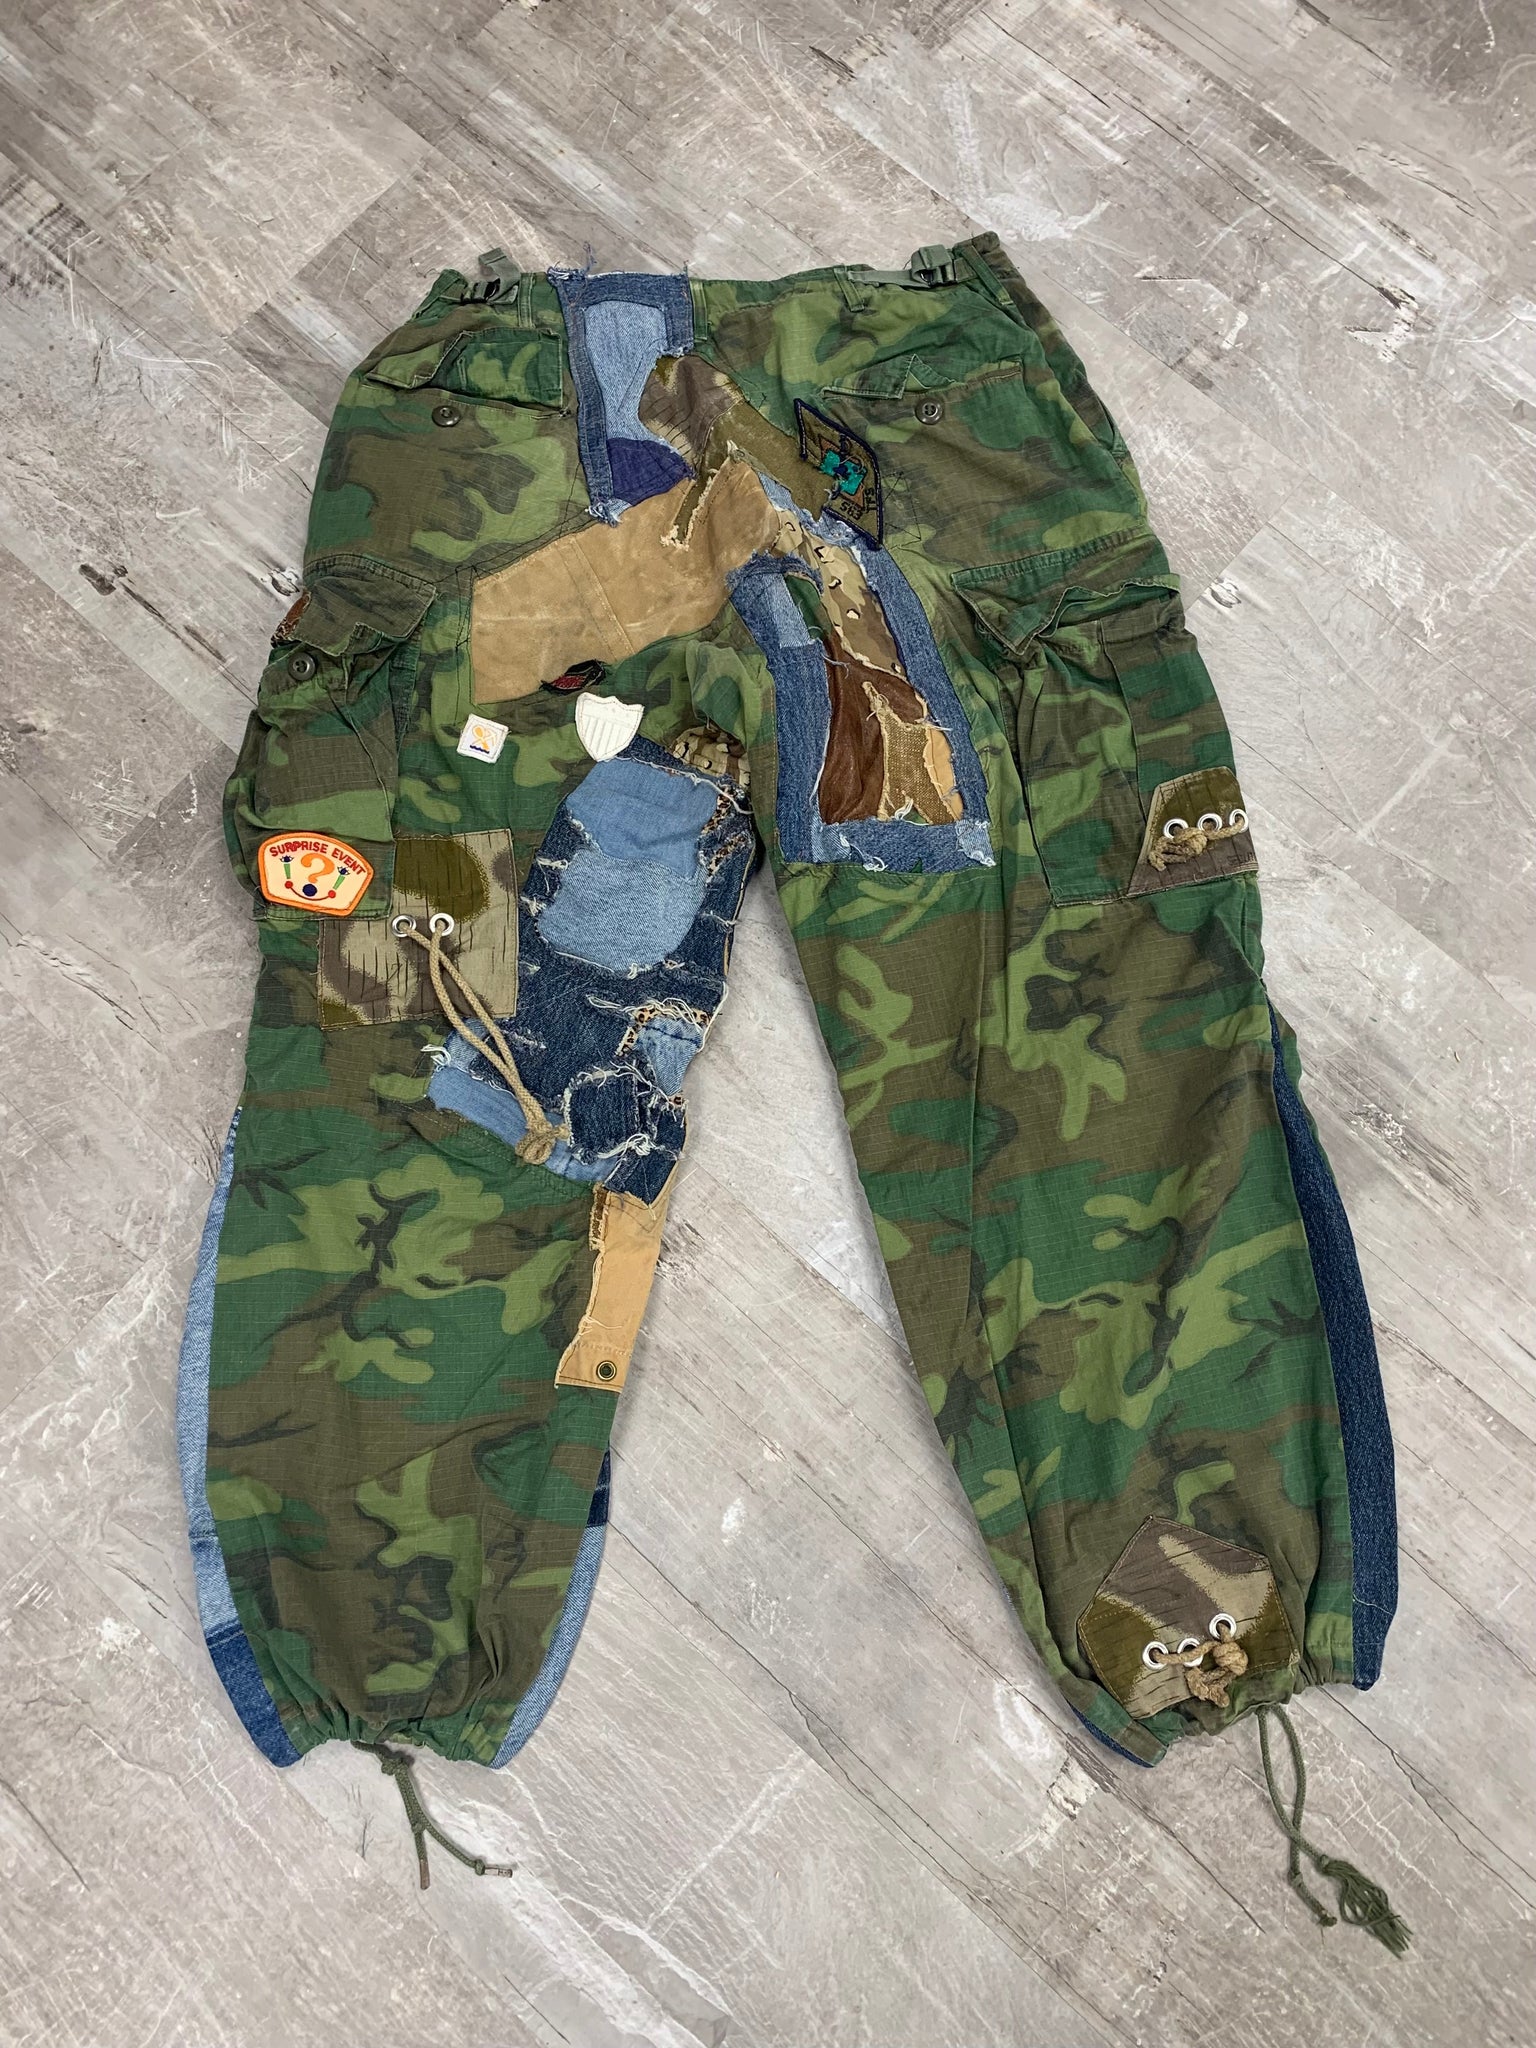 Vietnam Army Patchwork pants- 36x32